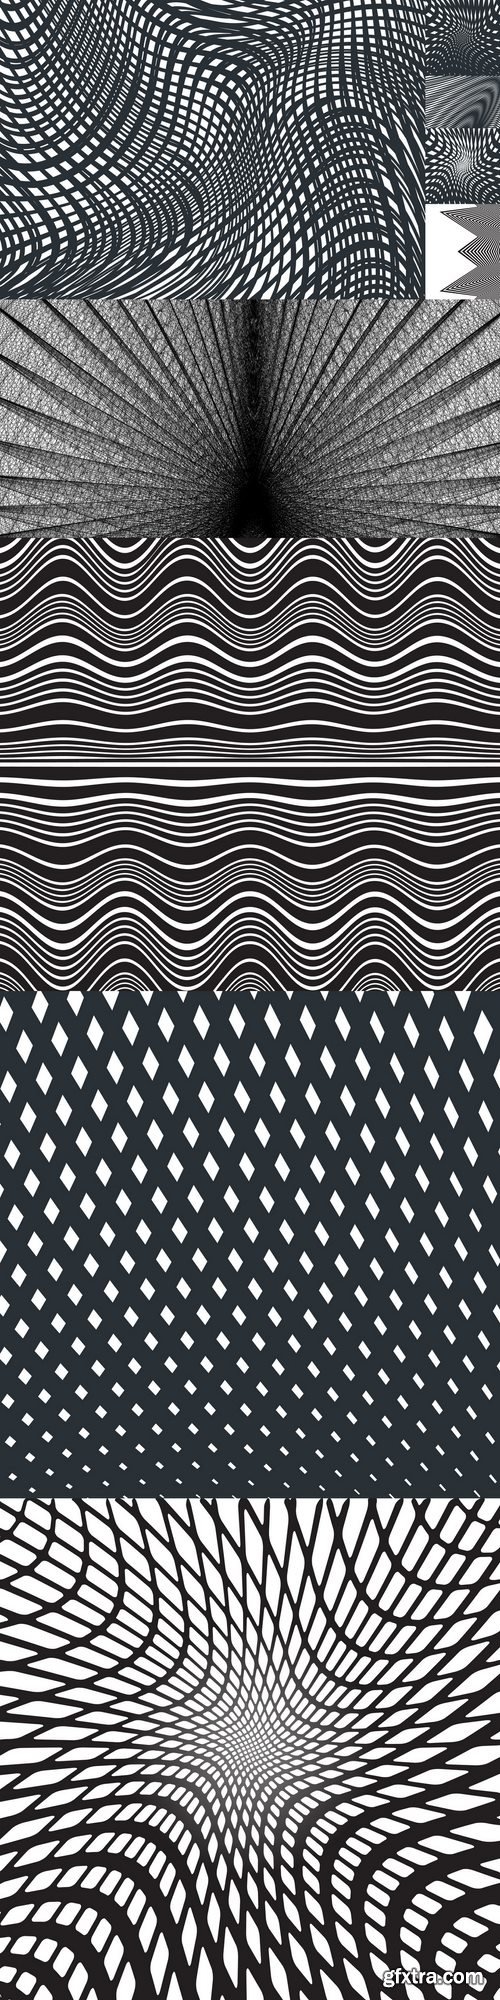 Optical art opart striped wavy background